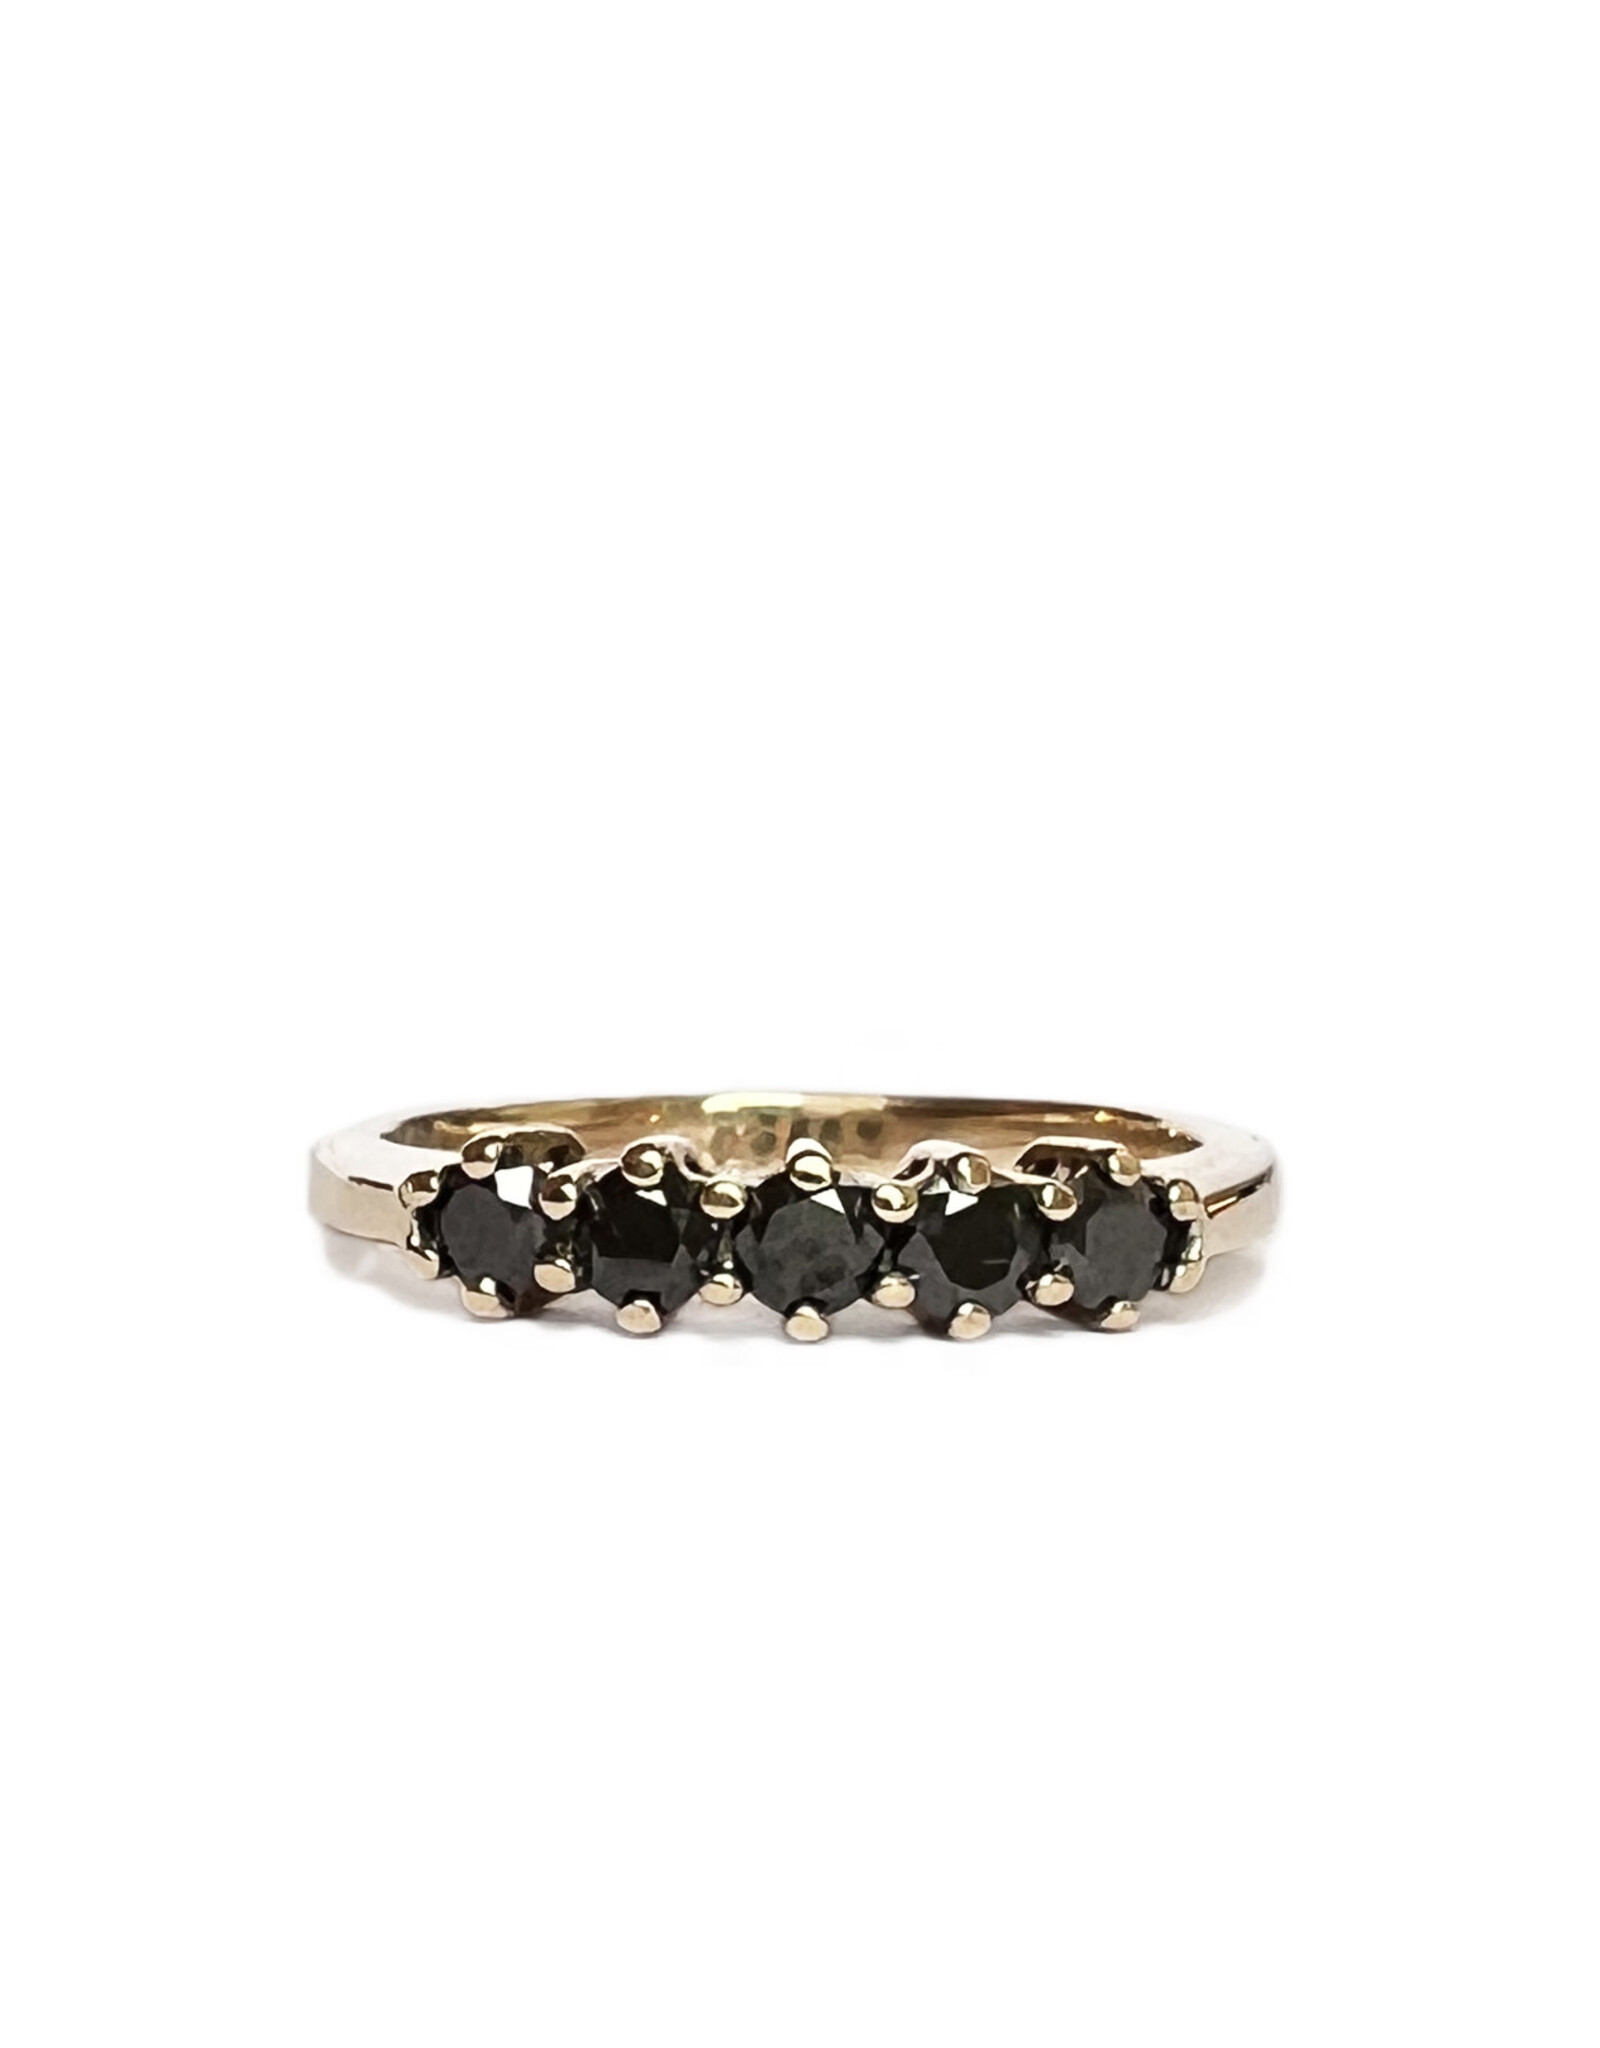 Vintage 9k Gold Five Black Diamond Row Ring - Size 7.5